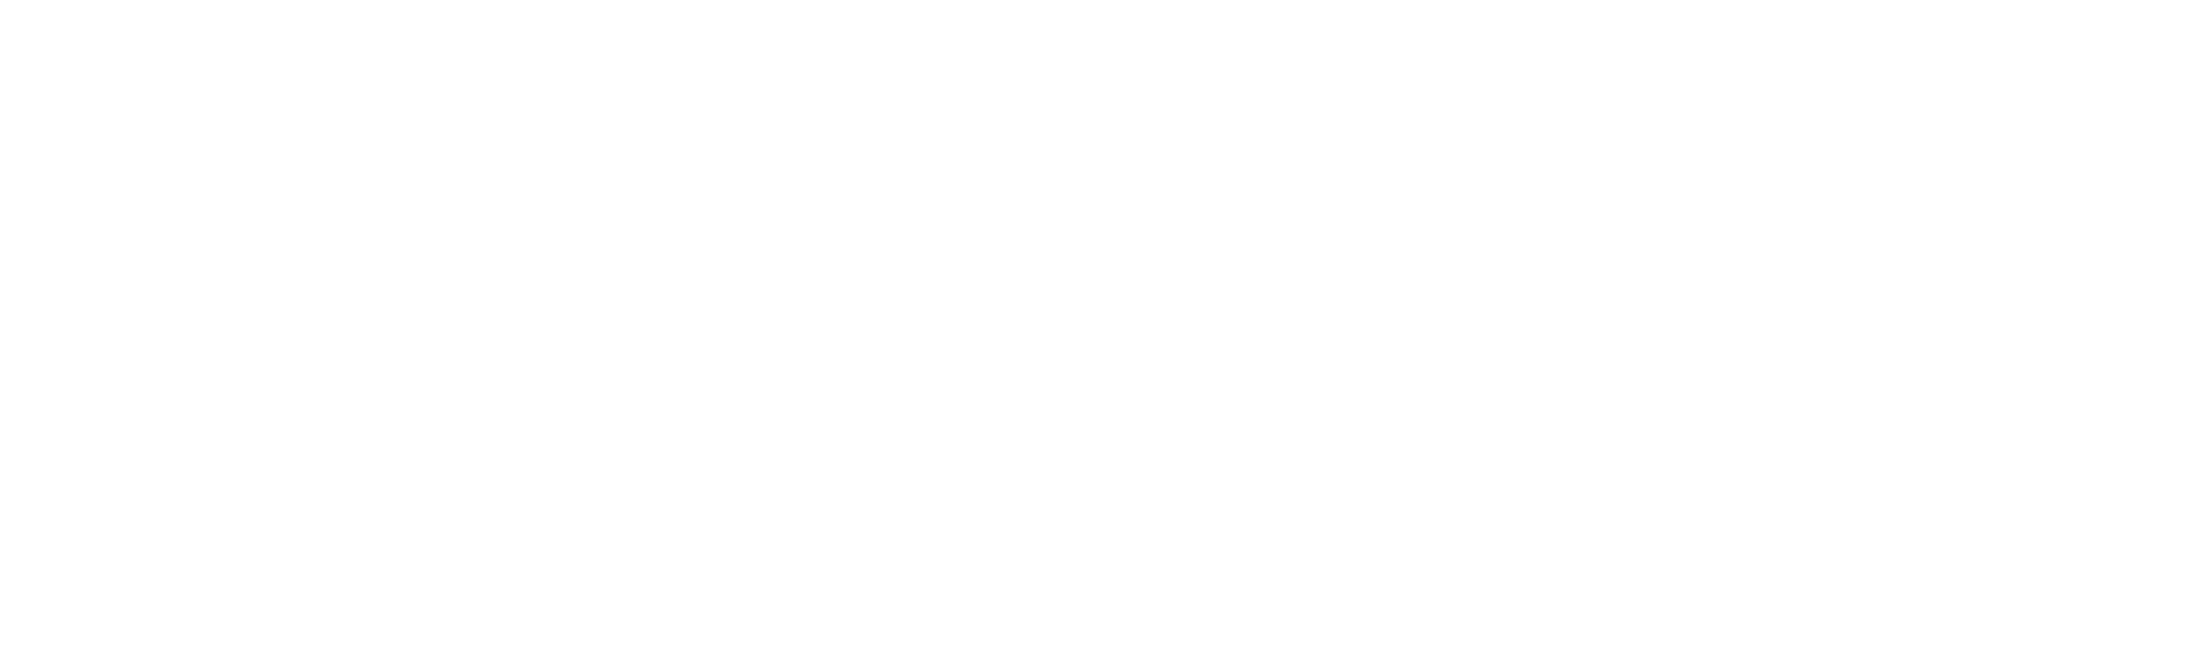 national-geographic-logo-white